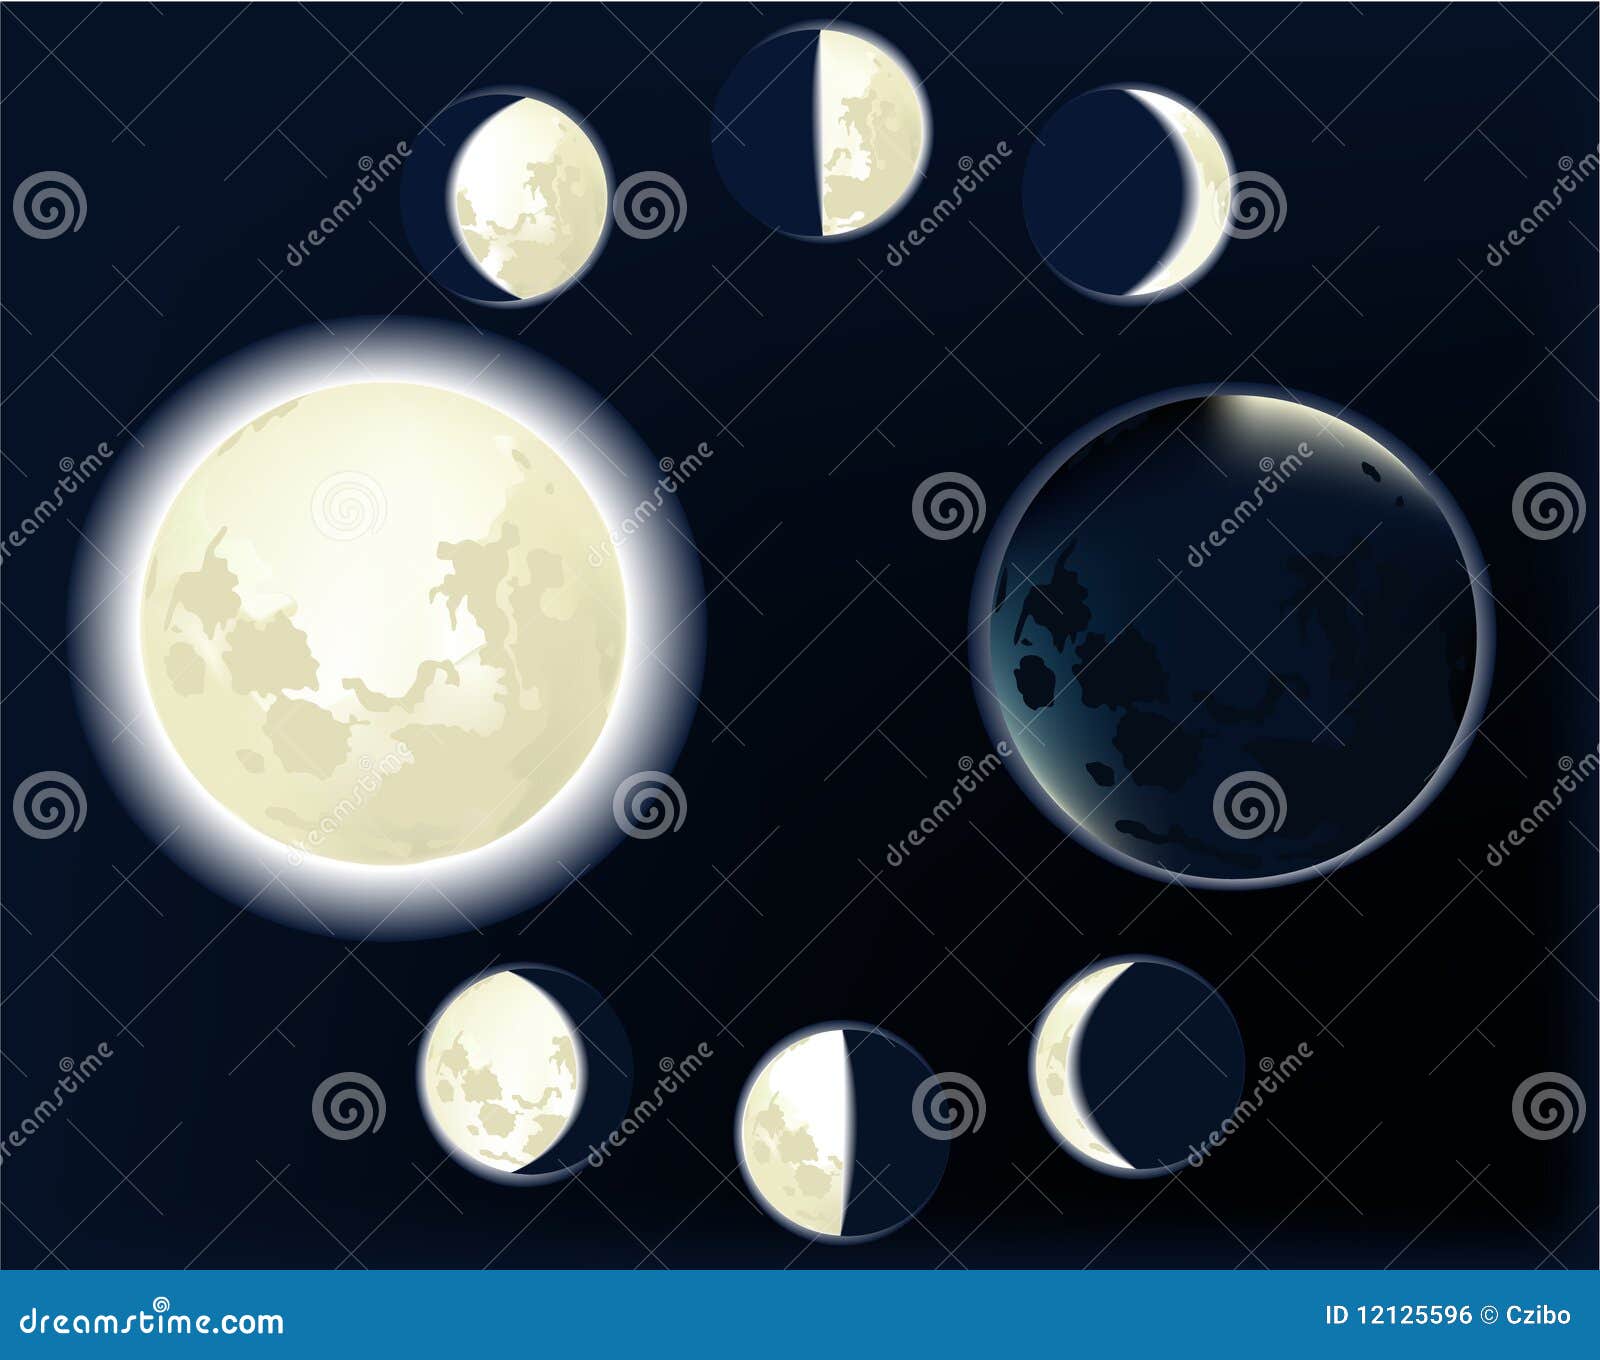 Moon phases stock vector. Illustration of orbit, celestial - 12125596